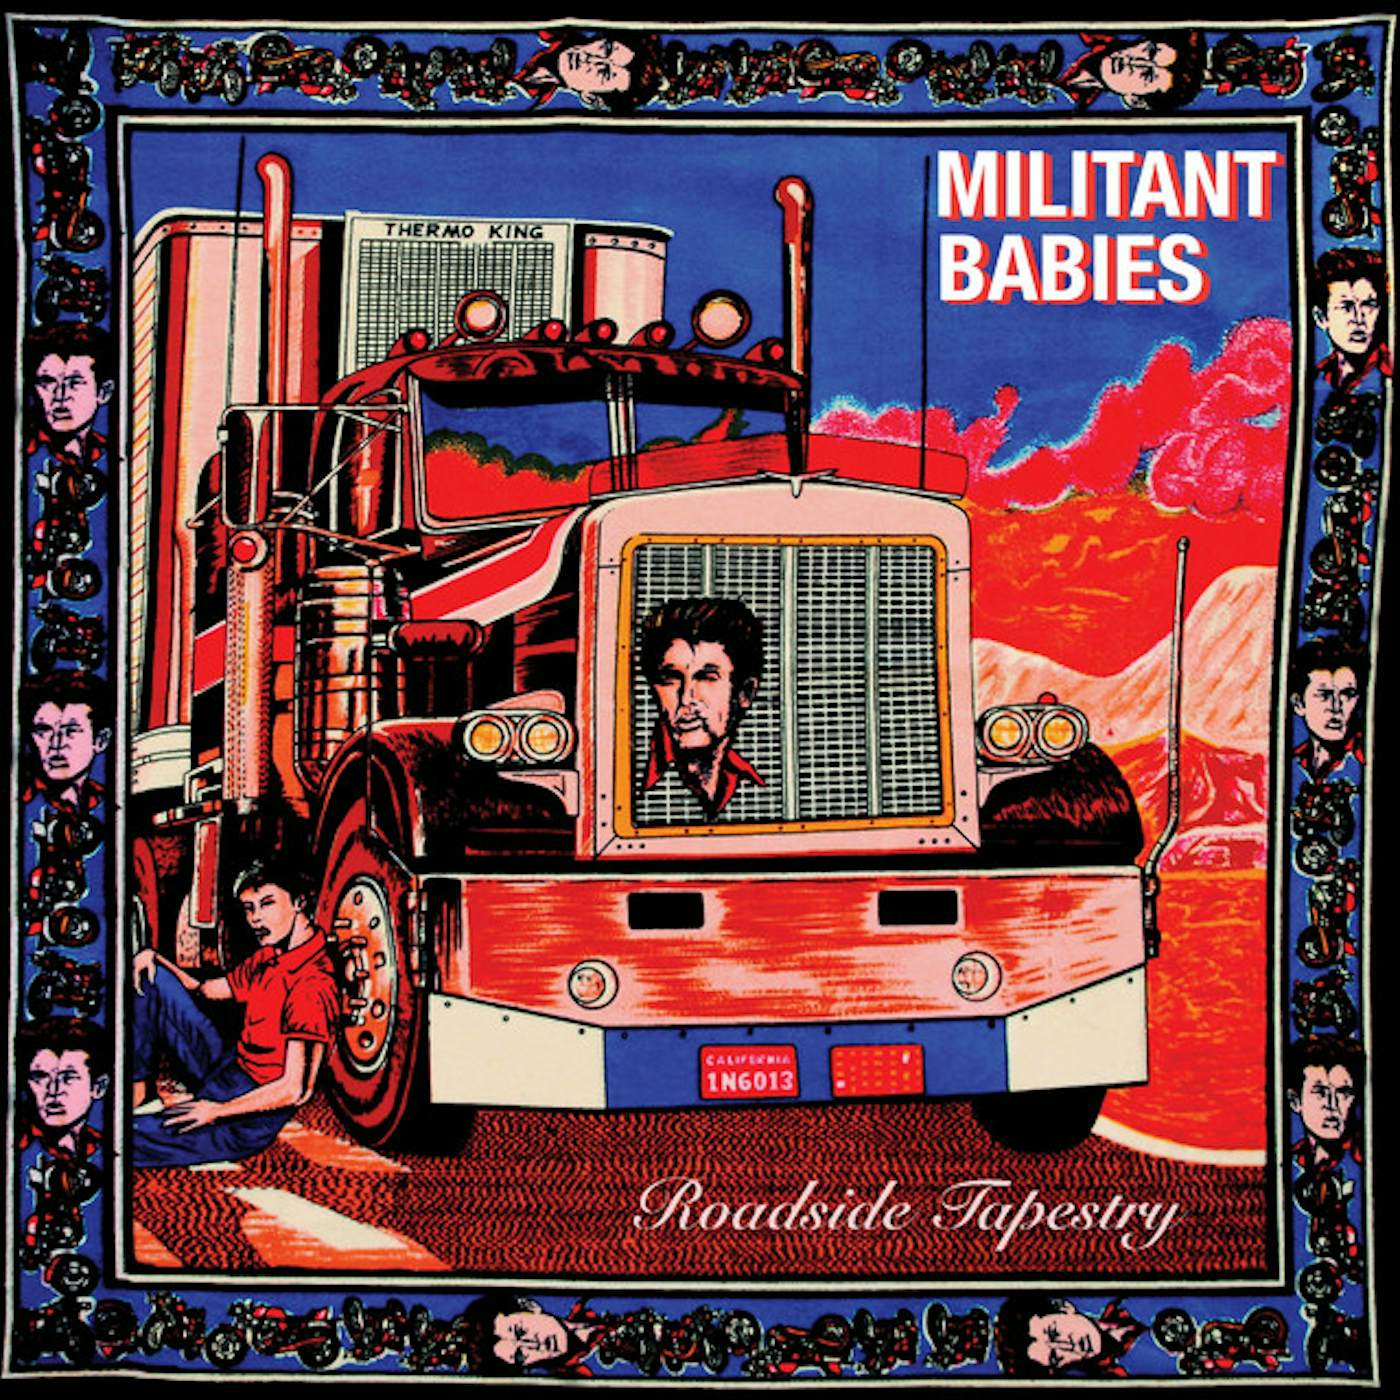 Militant Babies Roadside Tapestry Vinyl Record